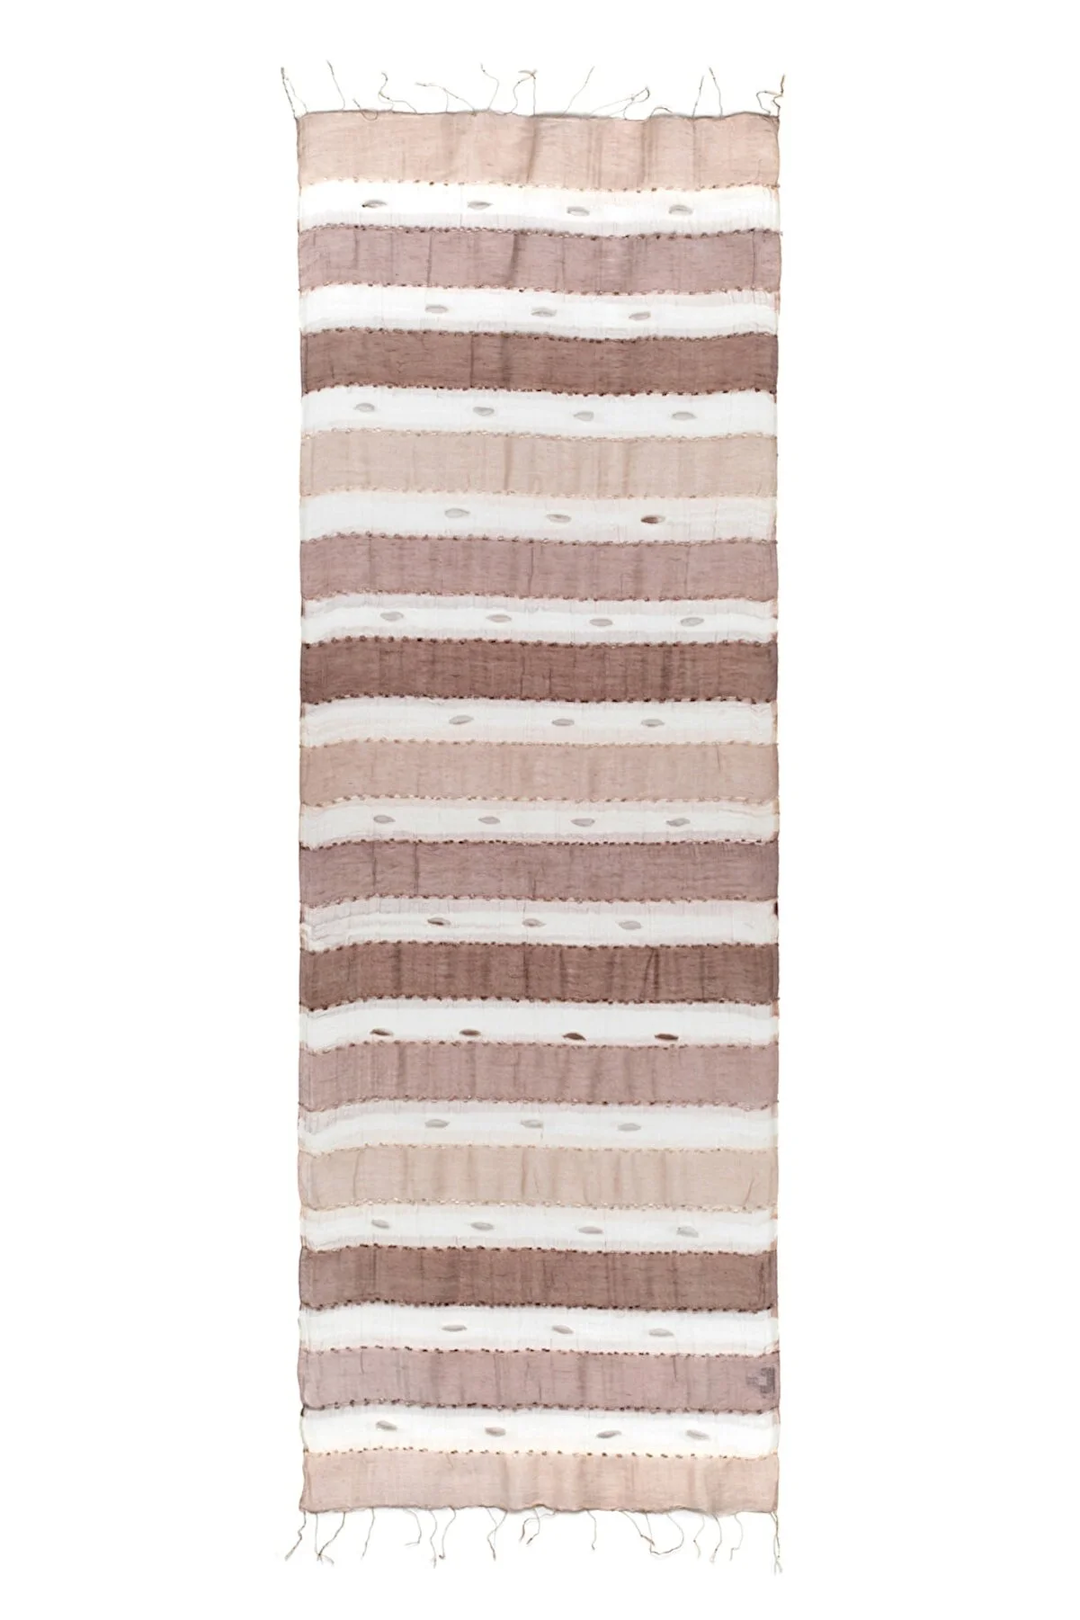 Silk Organza Sheer Multi Colors - Beige Taupe Sepia